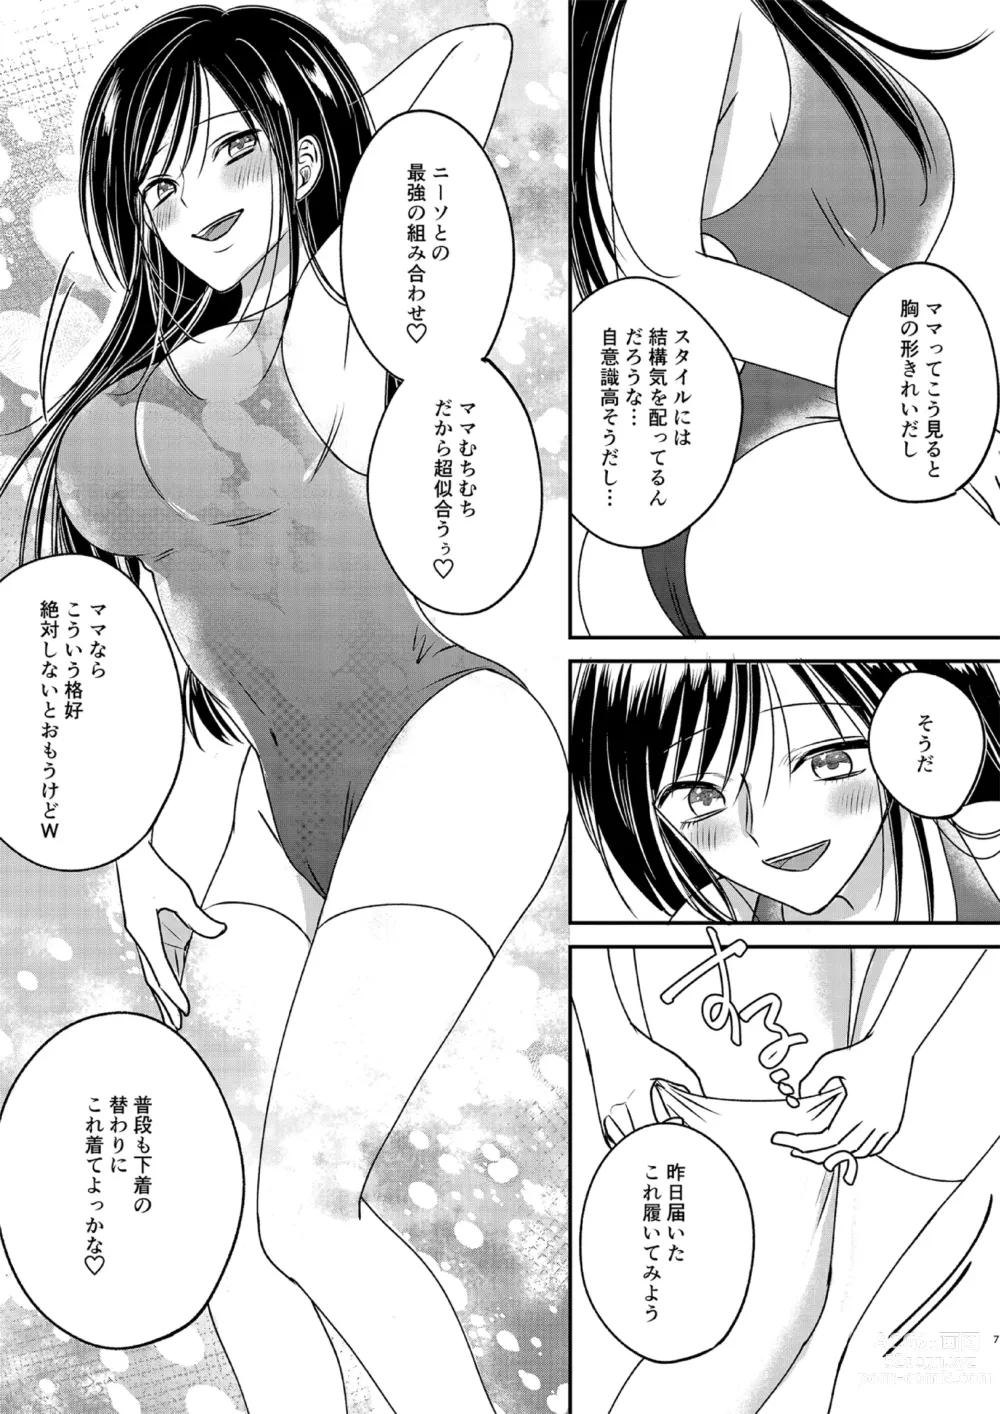 Page 7 of doujinshi Irekawari Cinderella 3